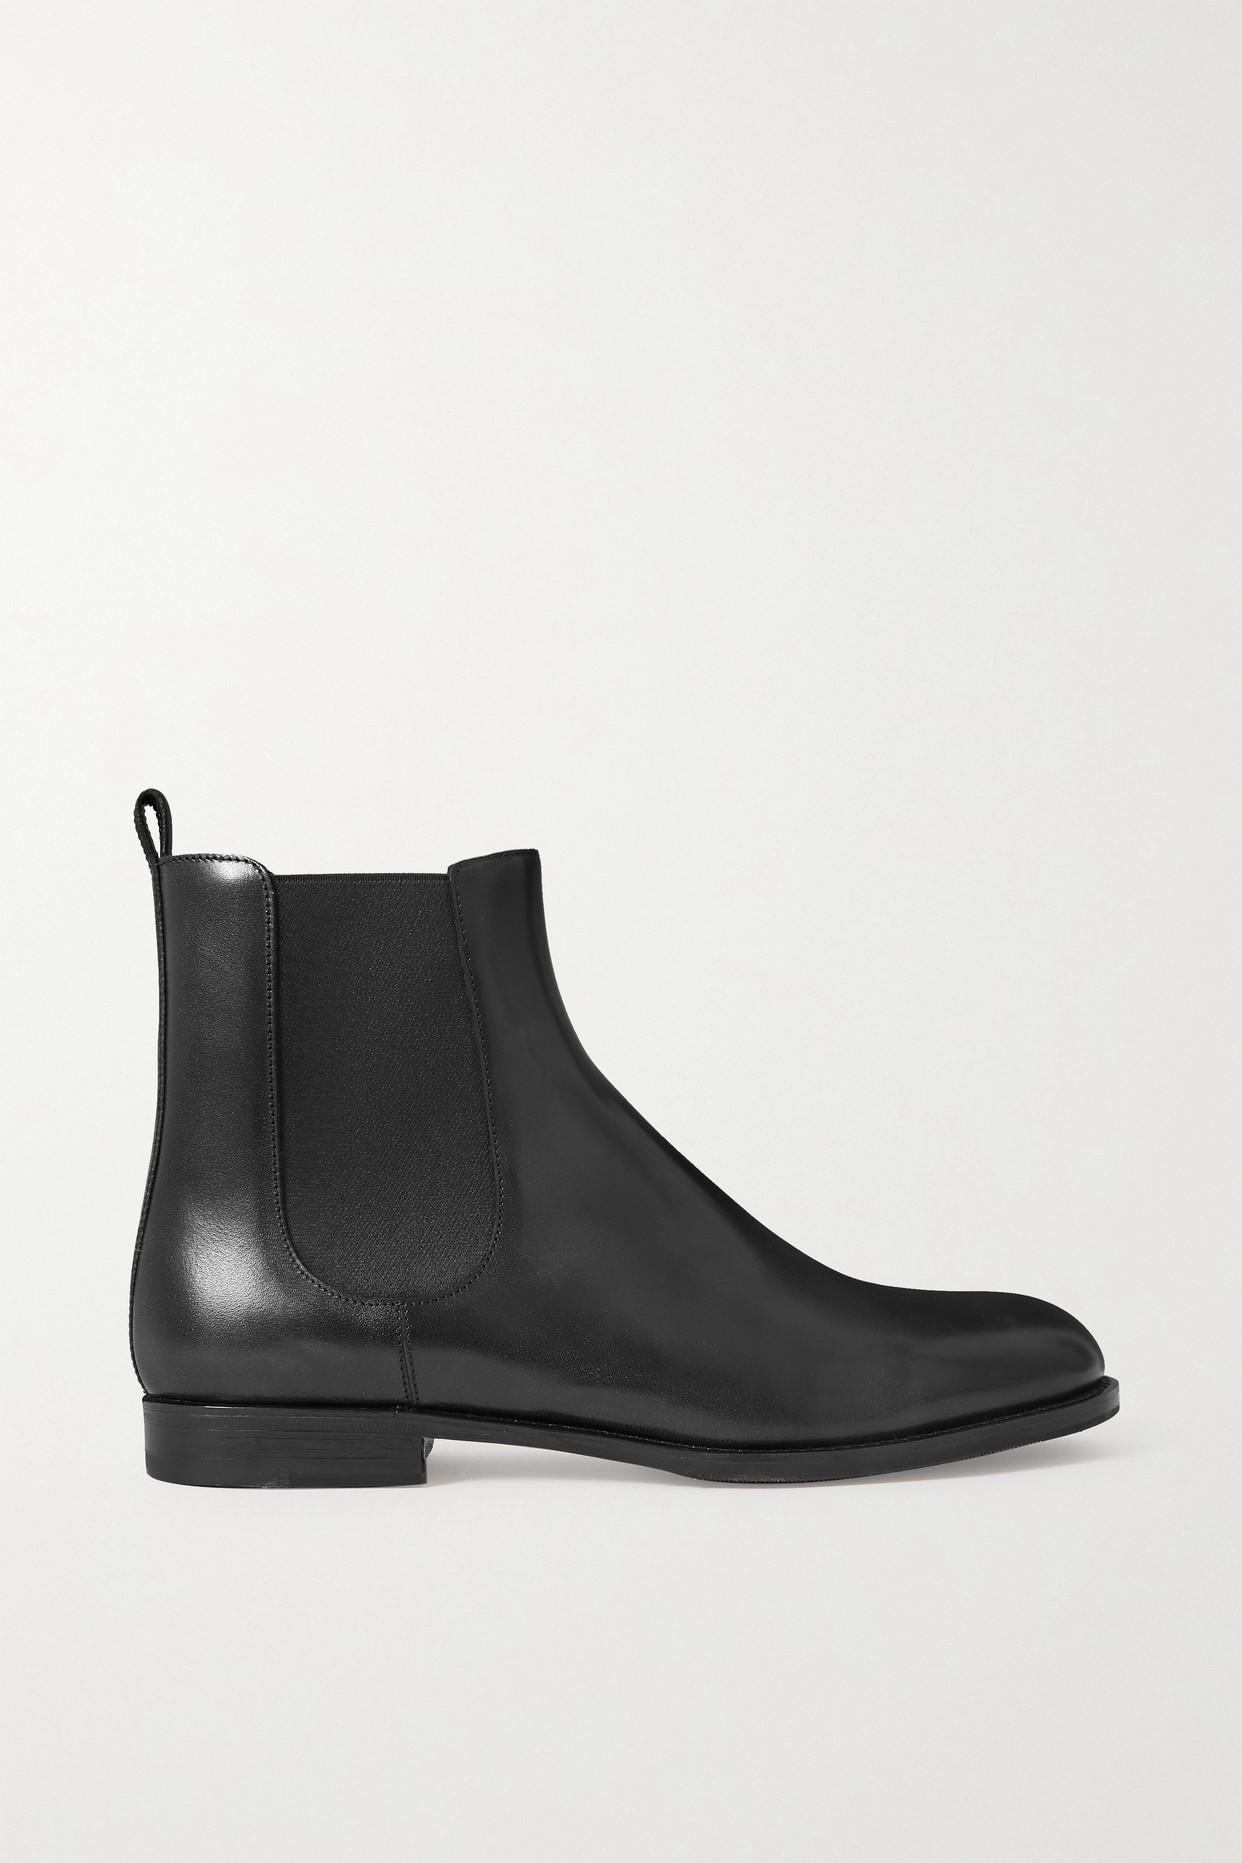 Manolo Blahnik Leather Chelsea Boots in Black | Lyst